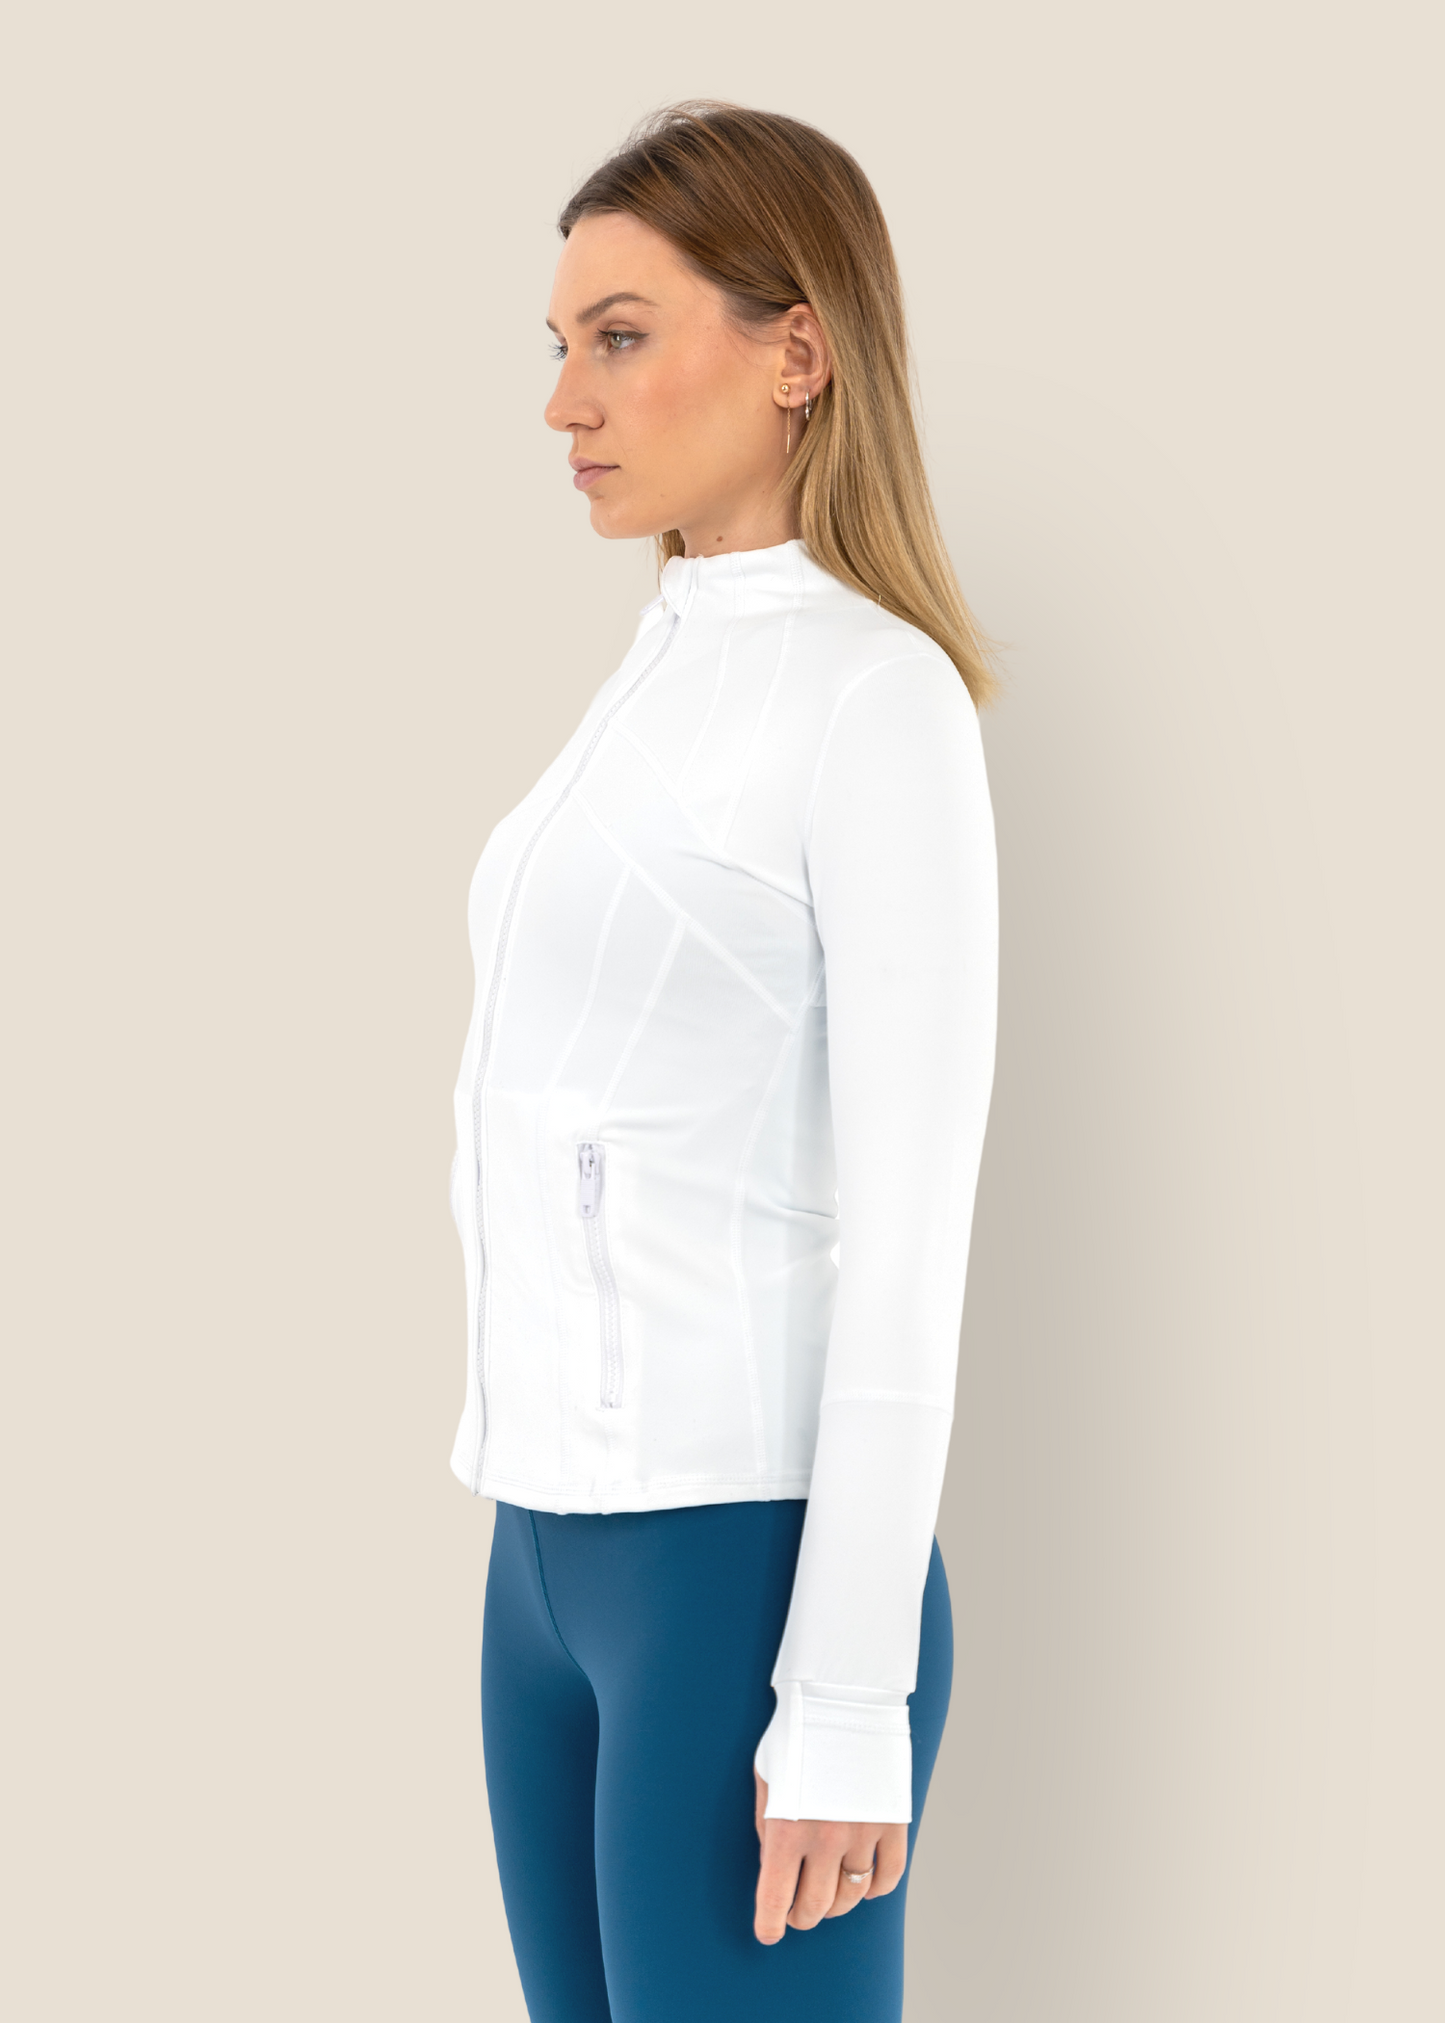 Form Jacket - Glacier White